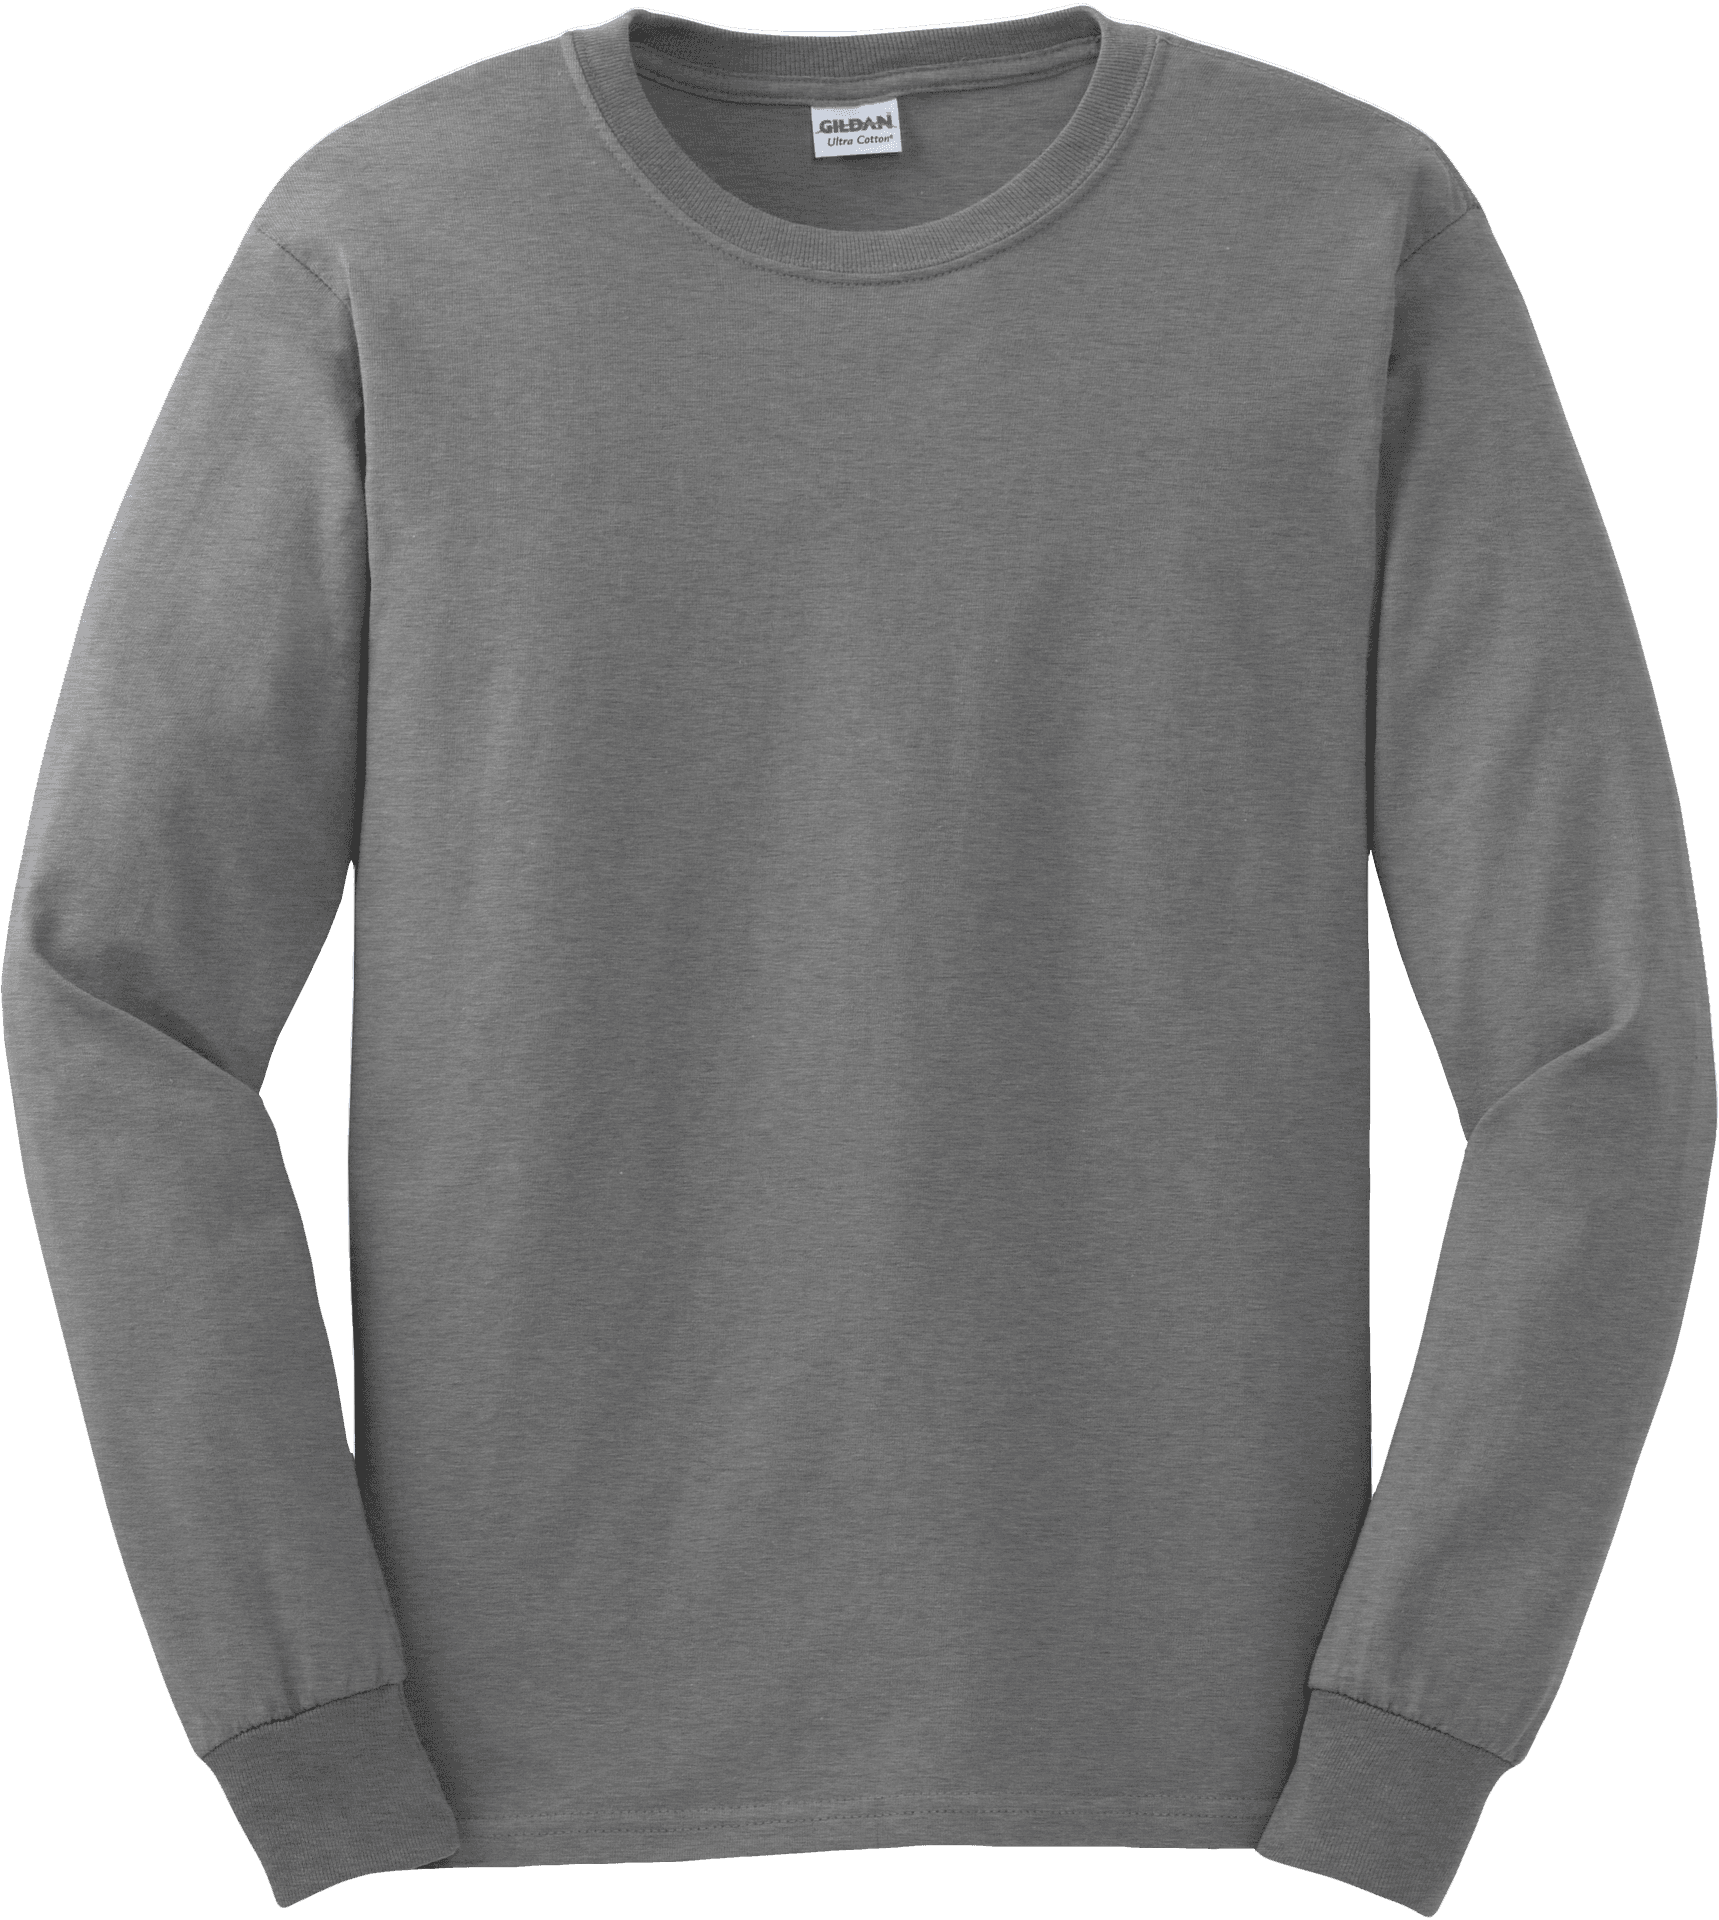 Gray Crewneck Sweatshirt Mockup PNG image